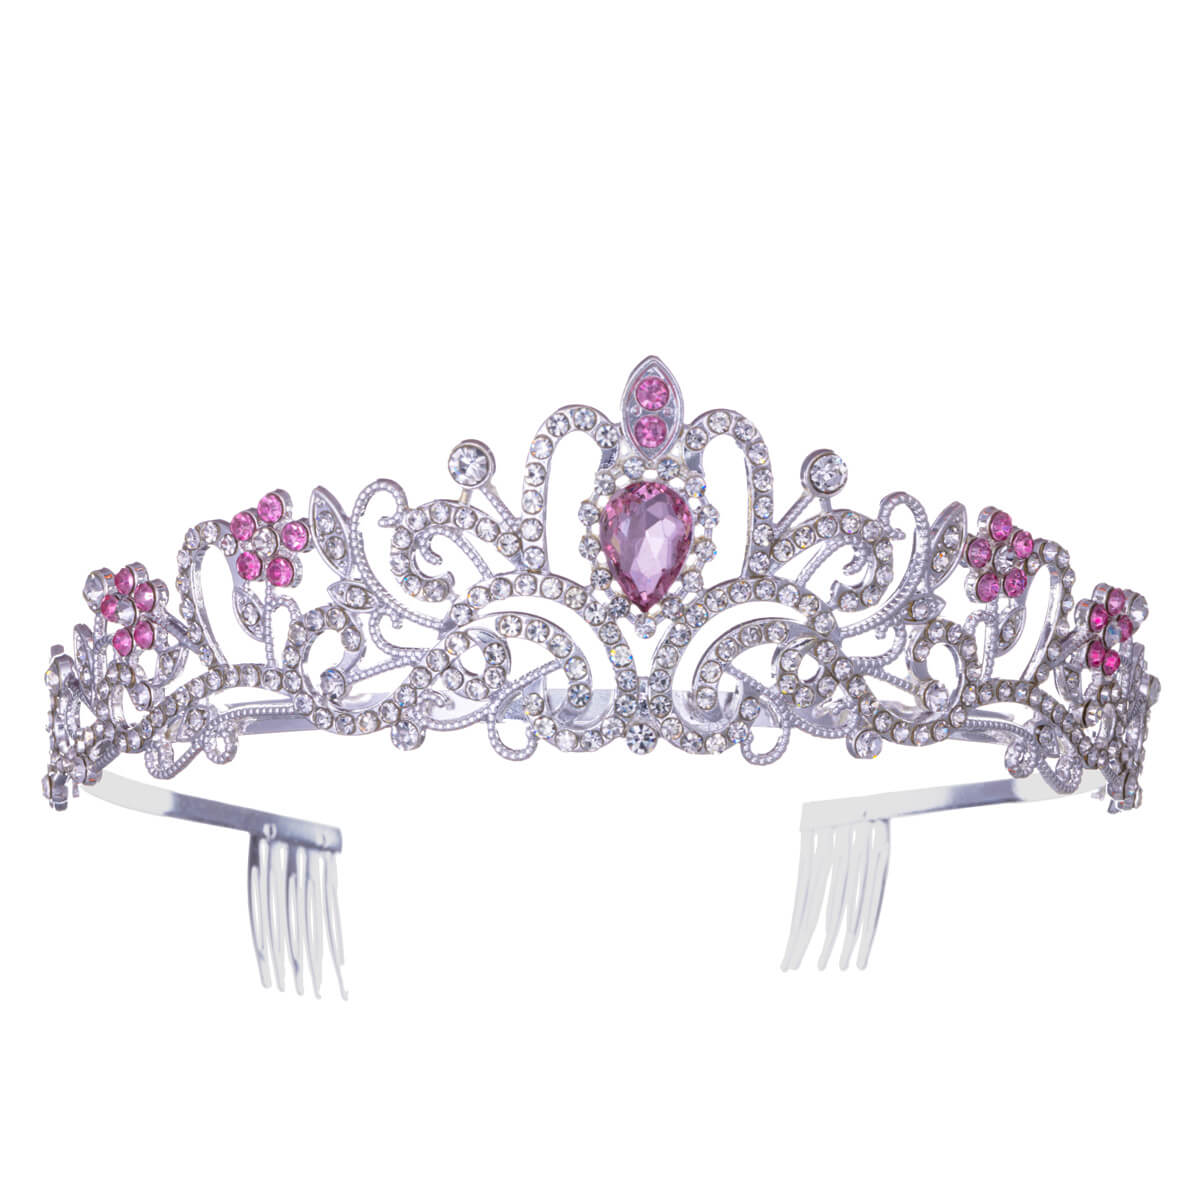 Princess party tiara tiara hairband